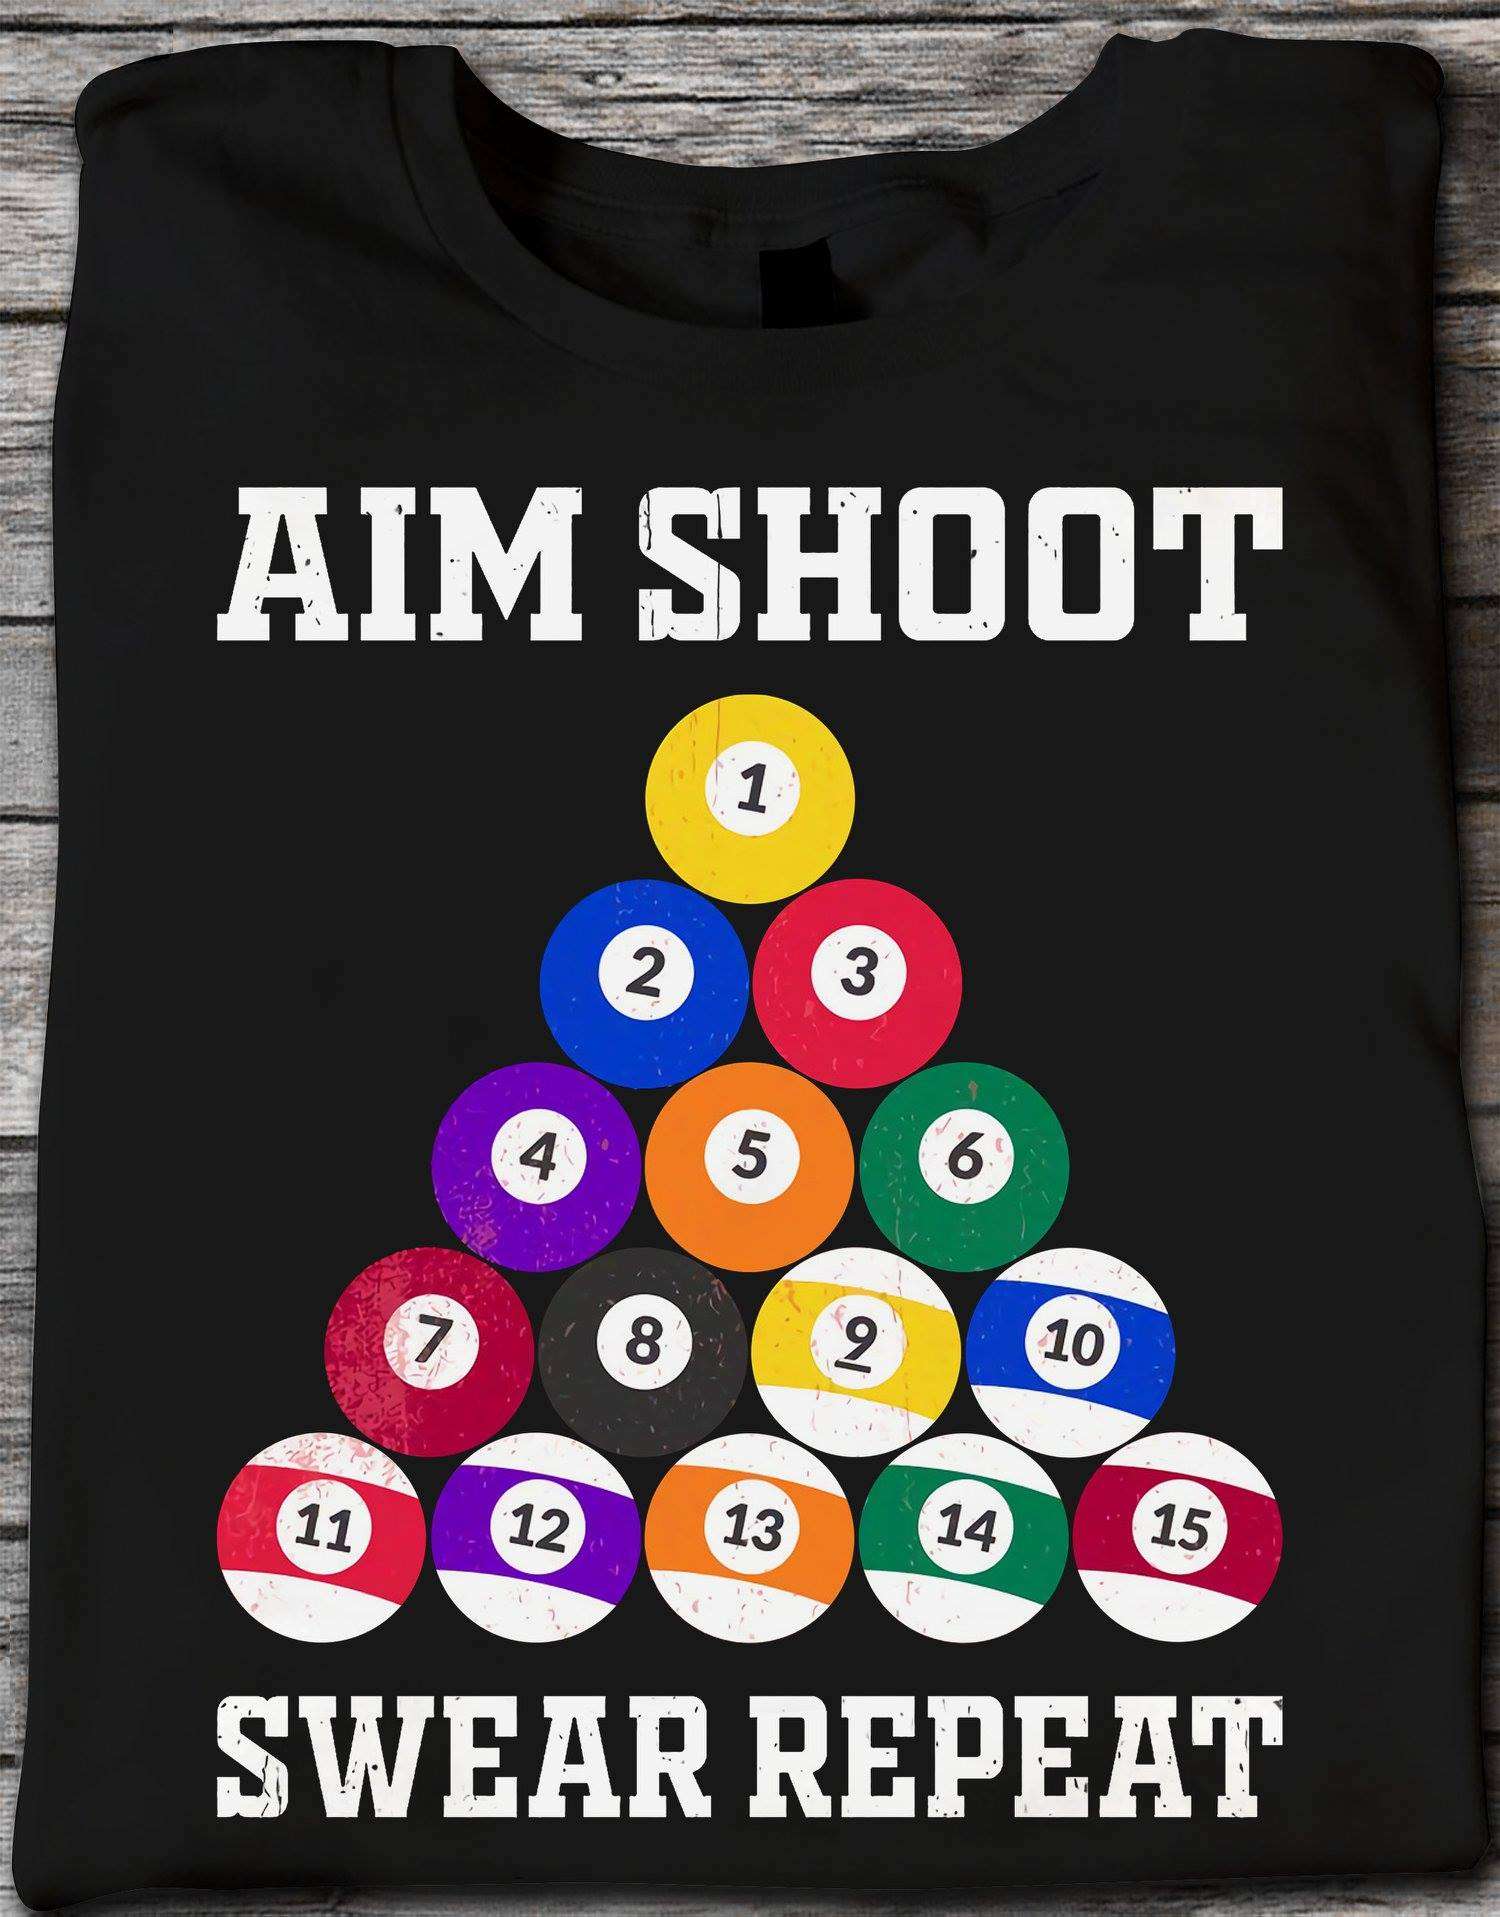 Aim shoot, swear repeat - Billiard the sport, love playing ball pool